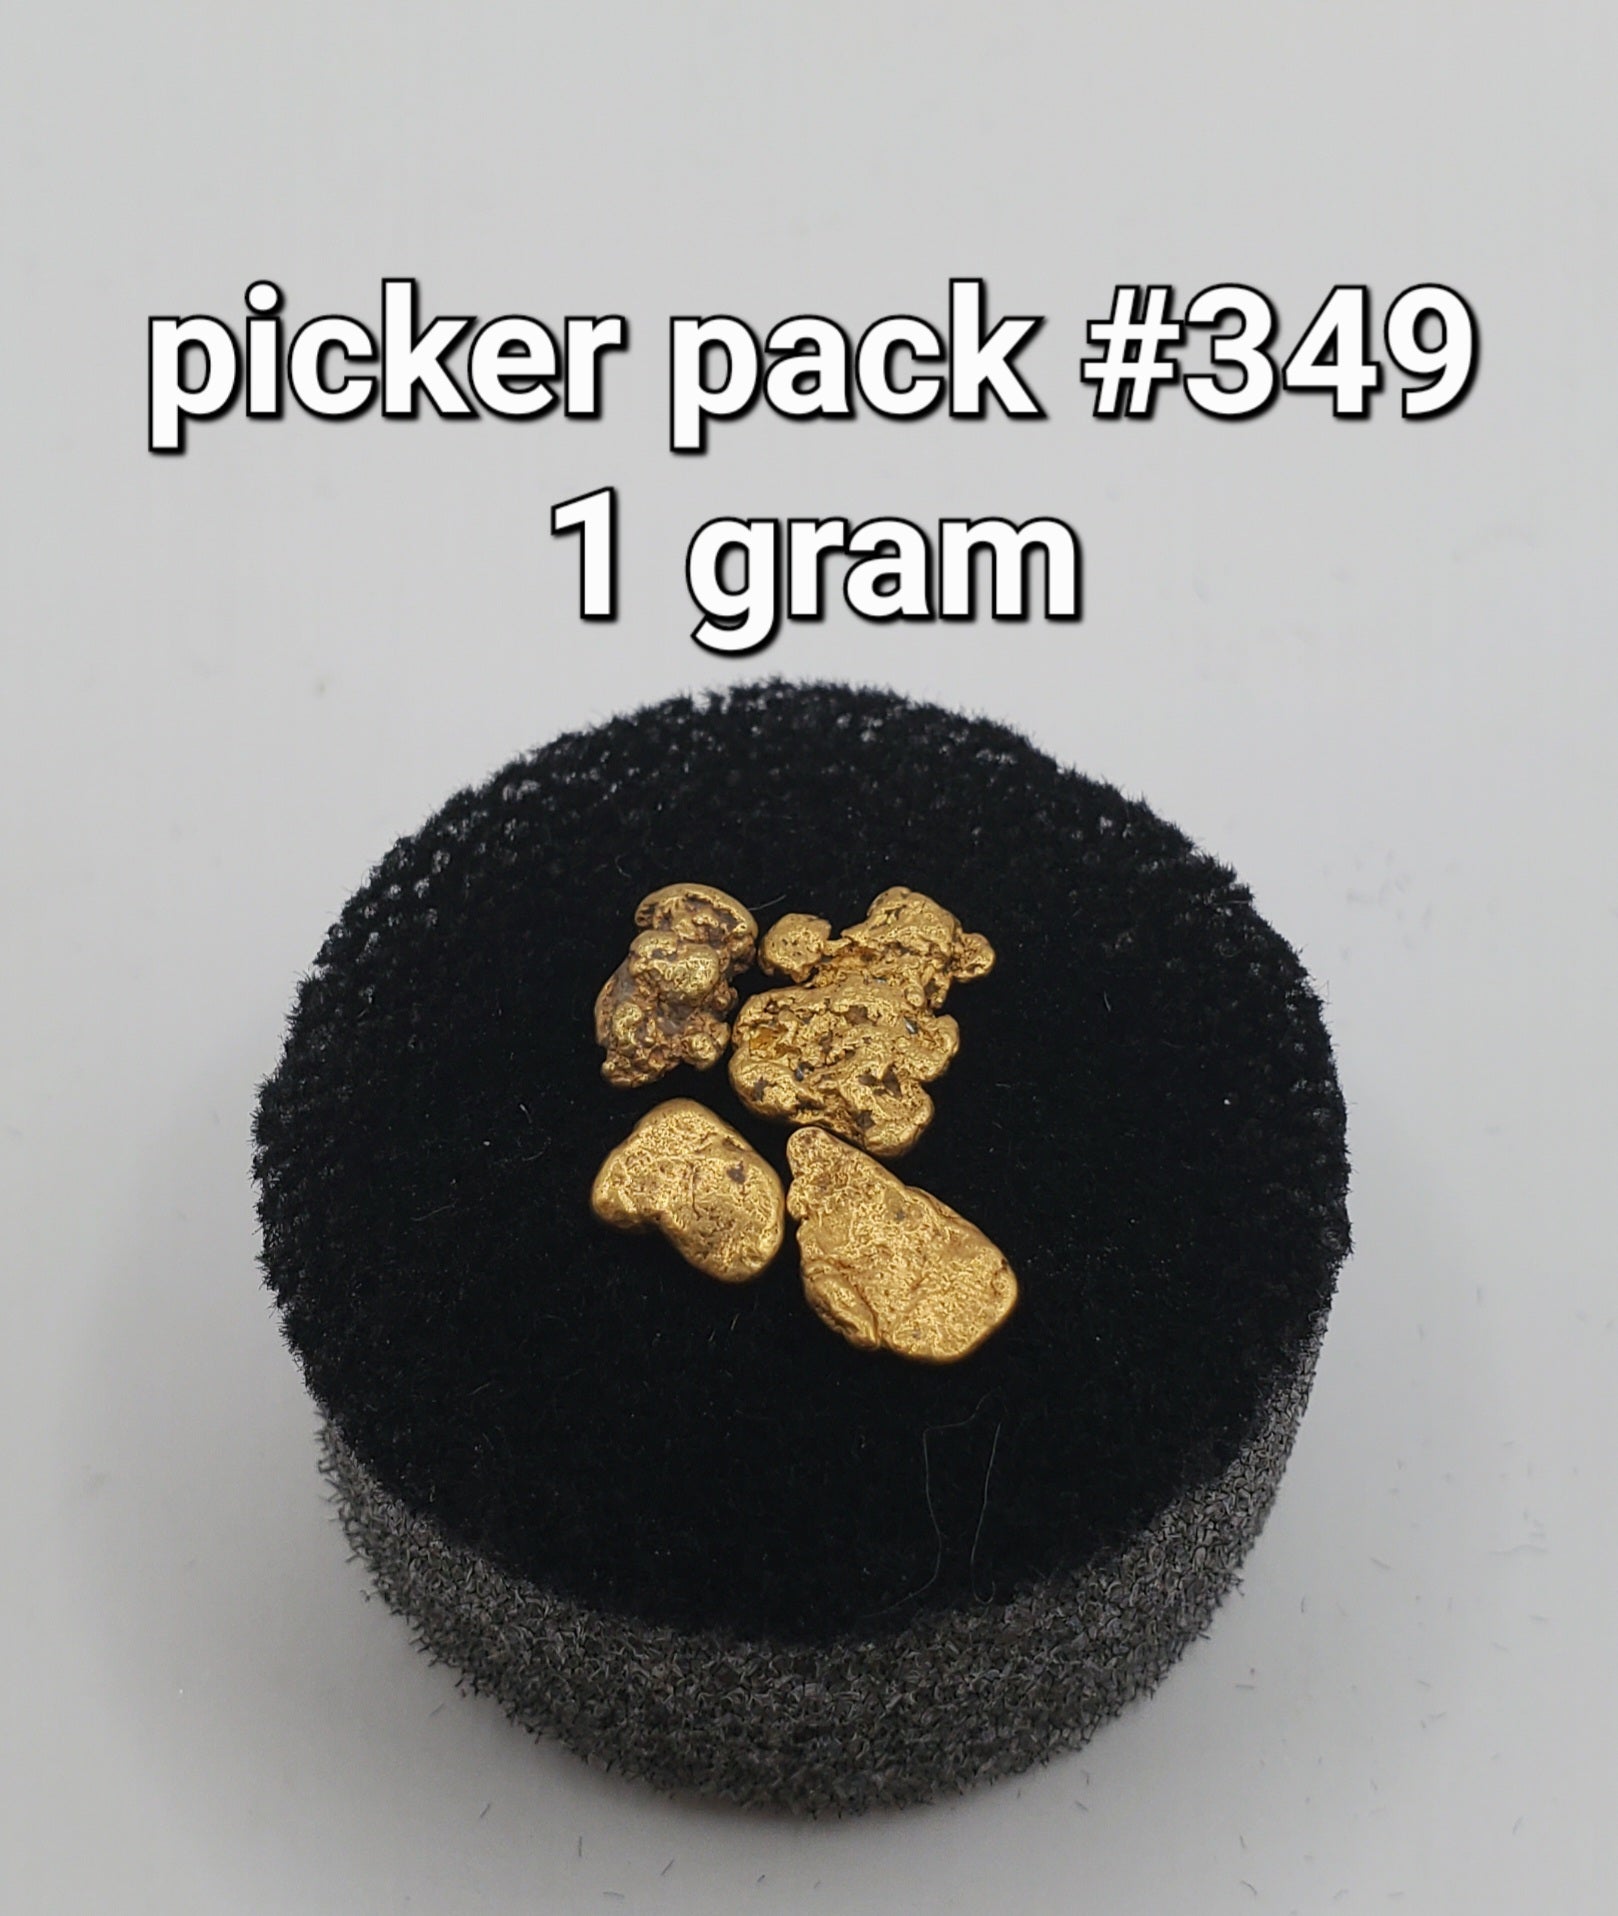 GOLD RUSH PICKER PACK#349